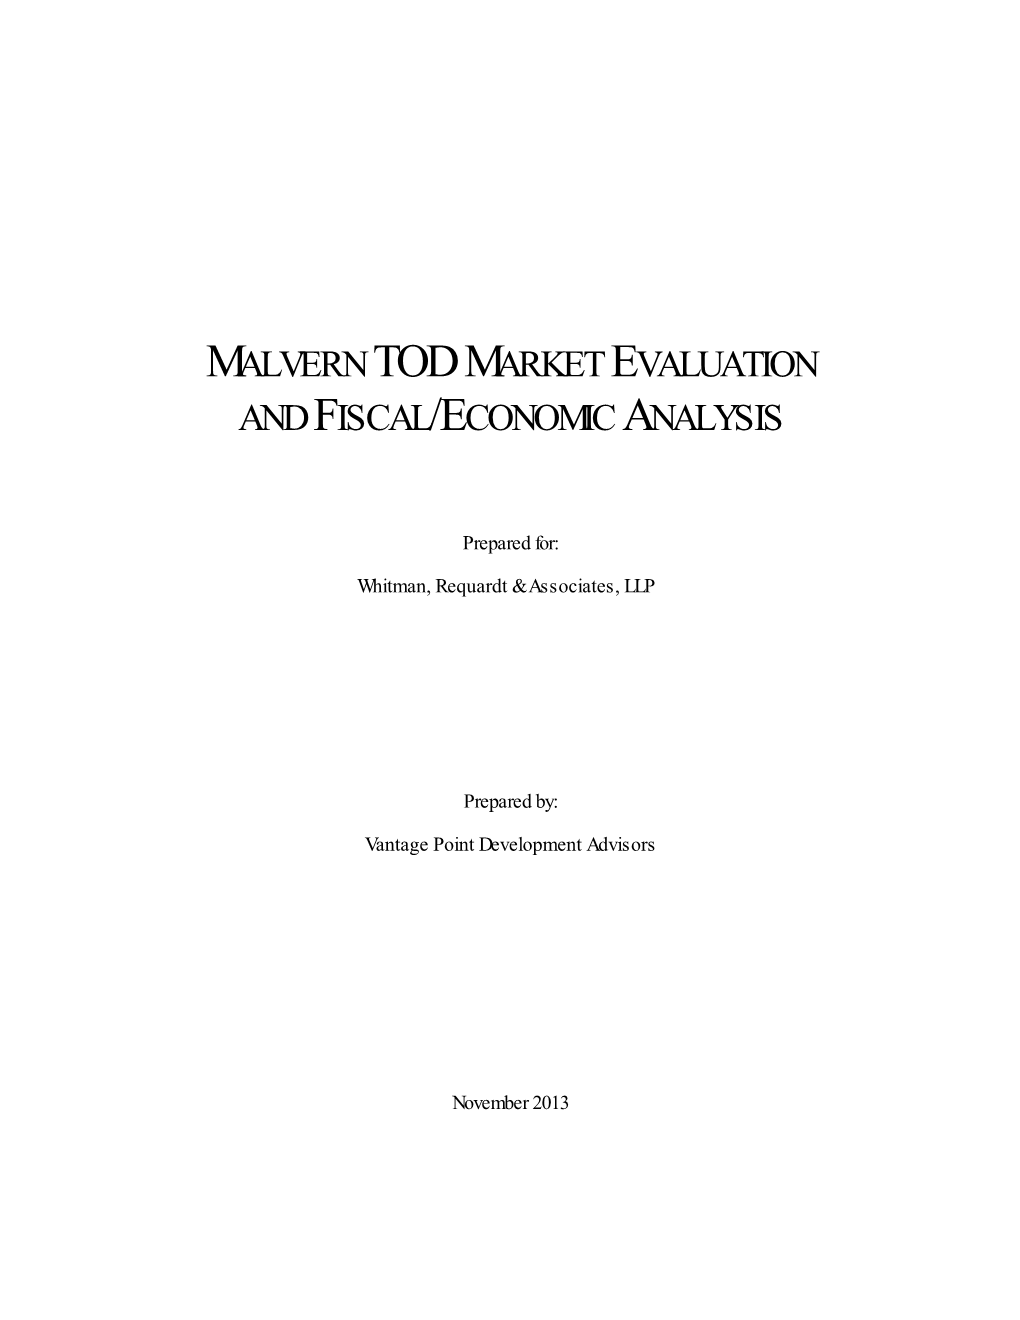 Malvern Tod Market Evaluation and Fiscal/Economic Analysis